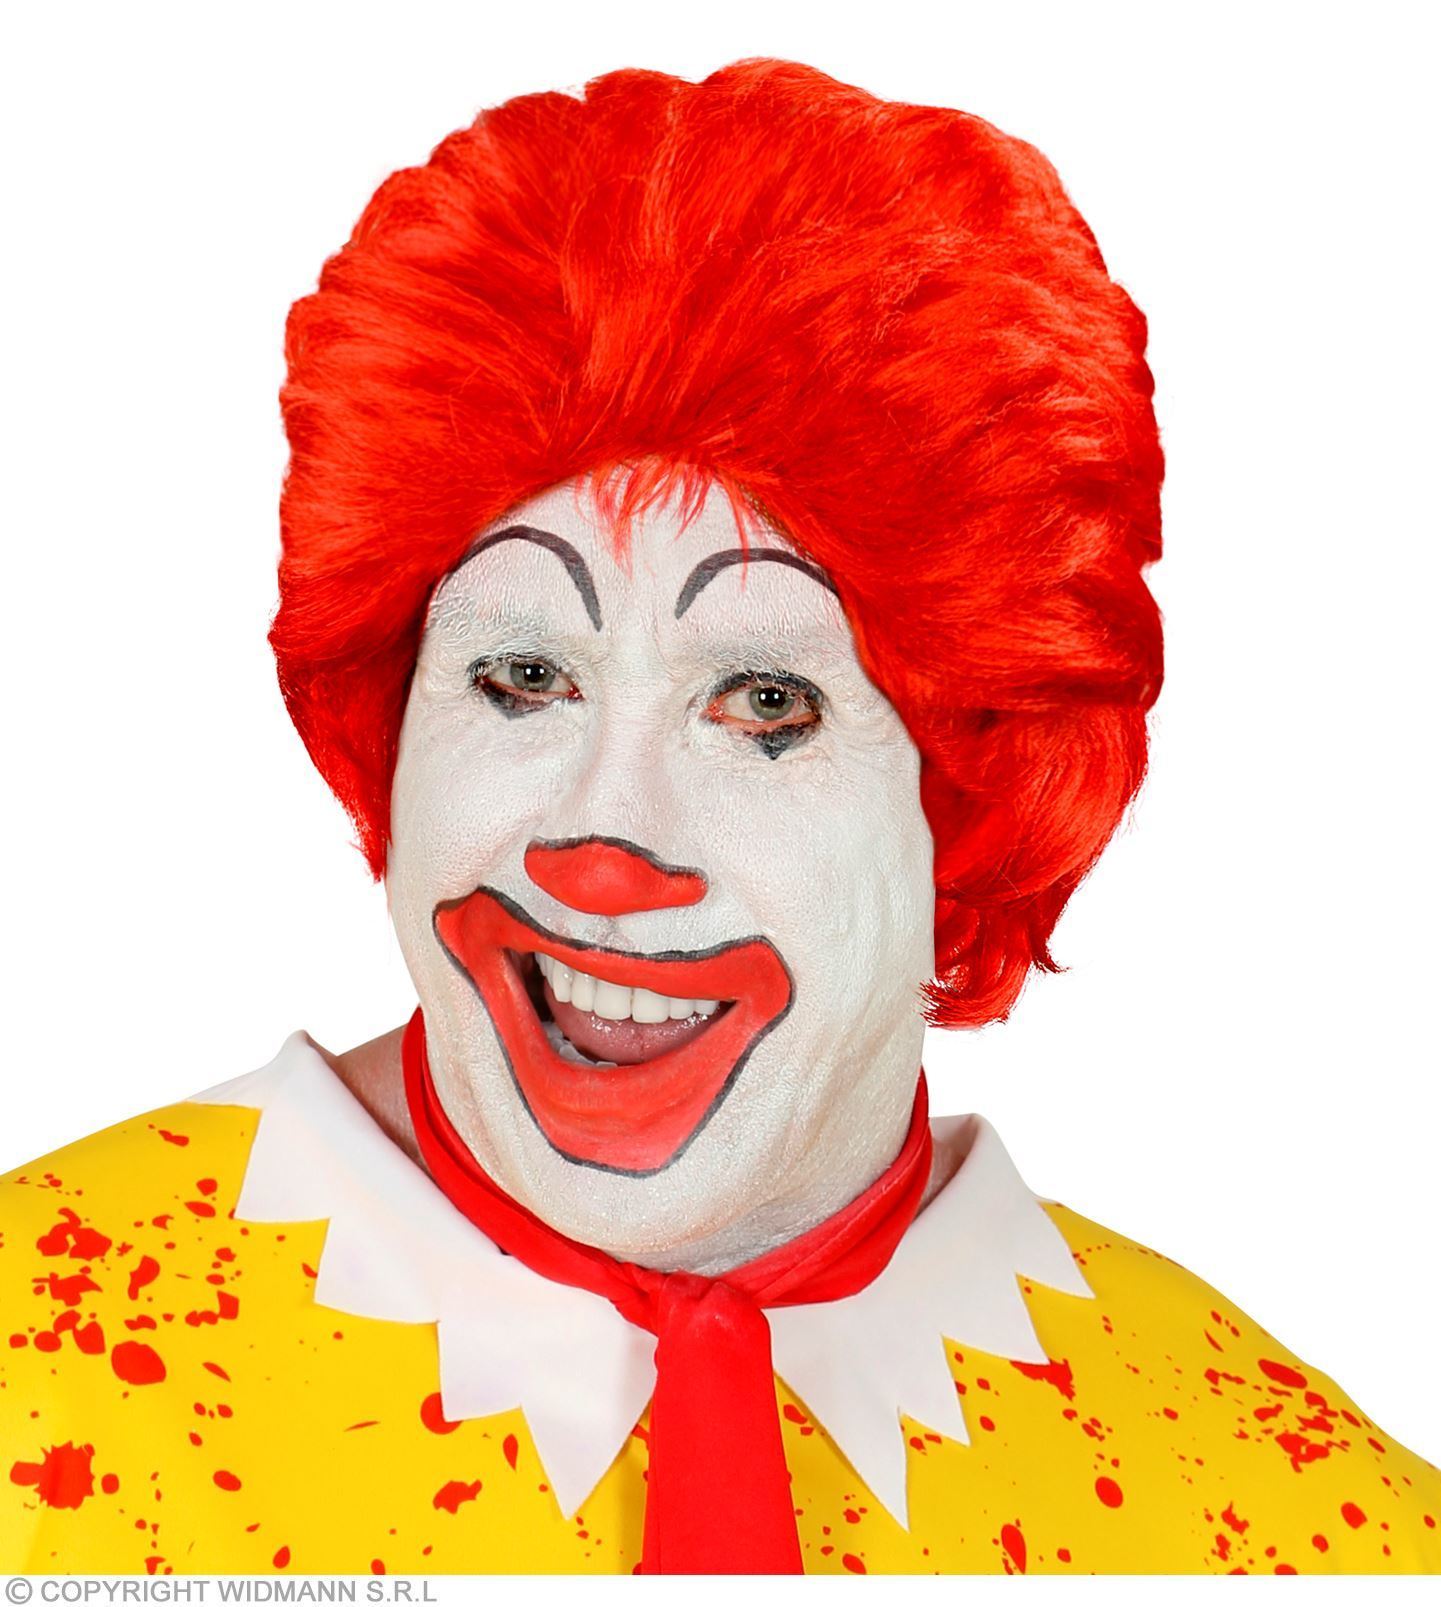 Rode Pruik Ronald de clown rood